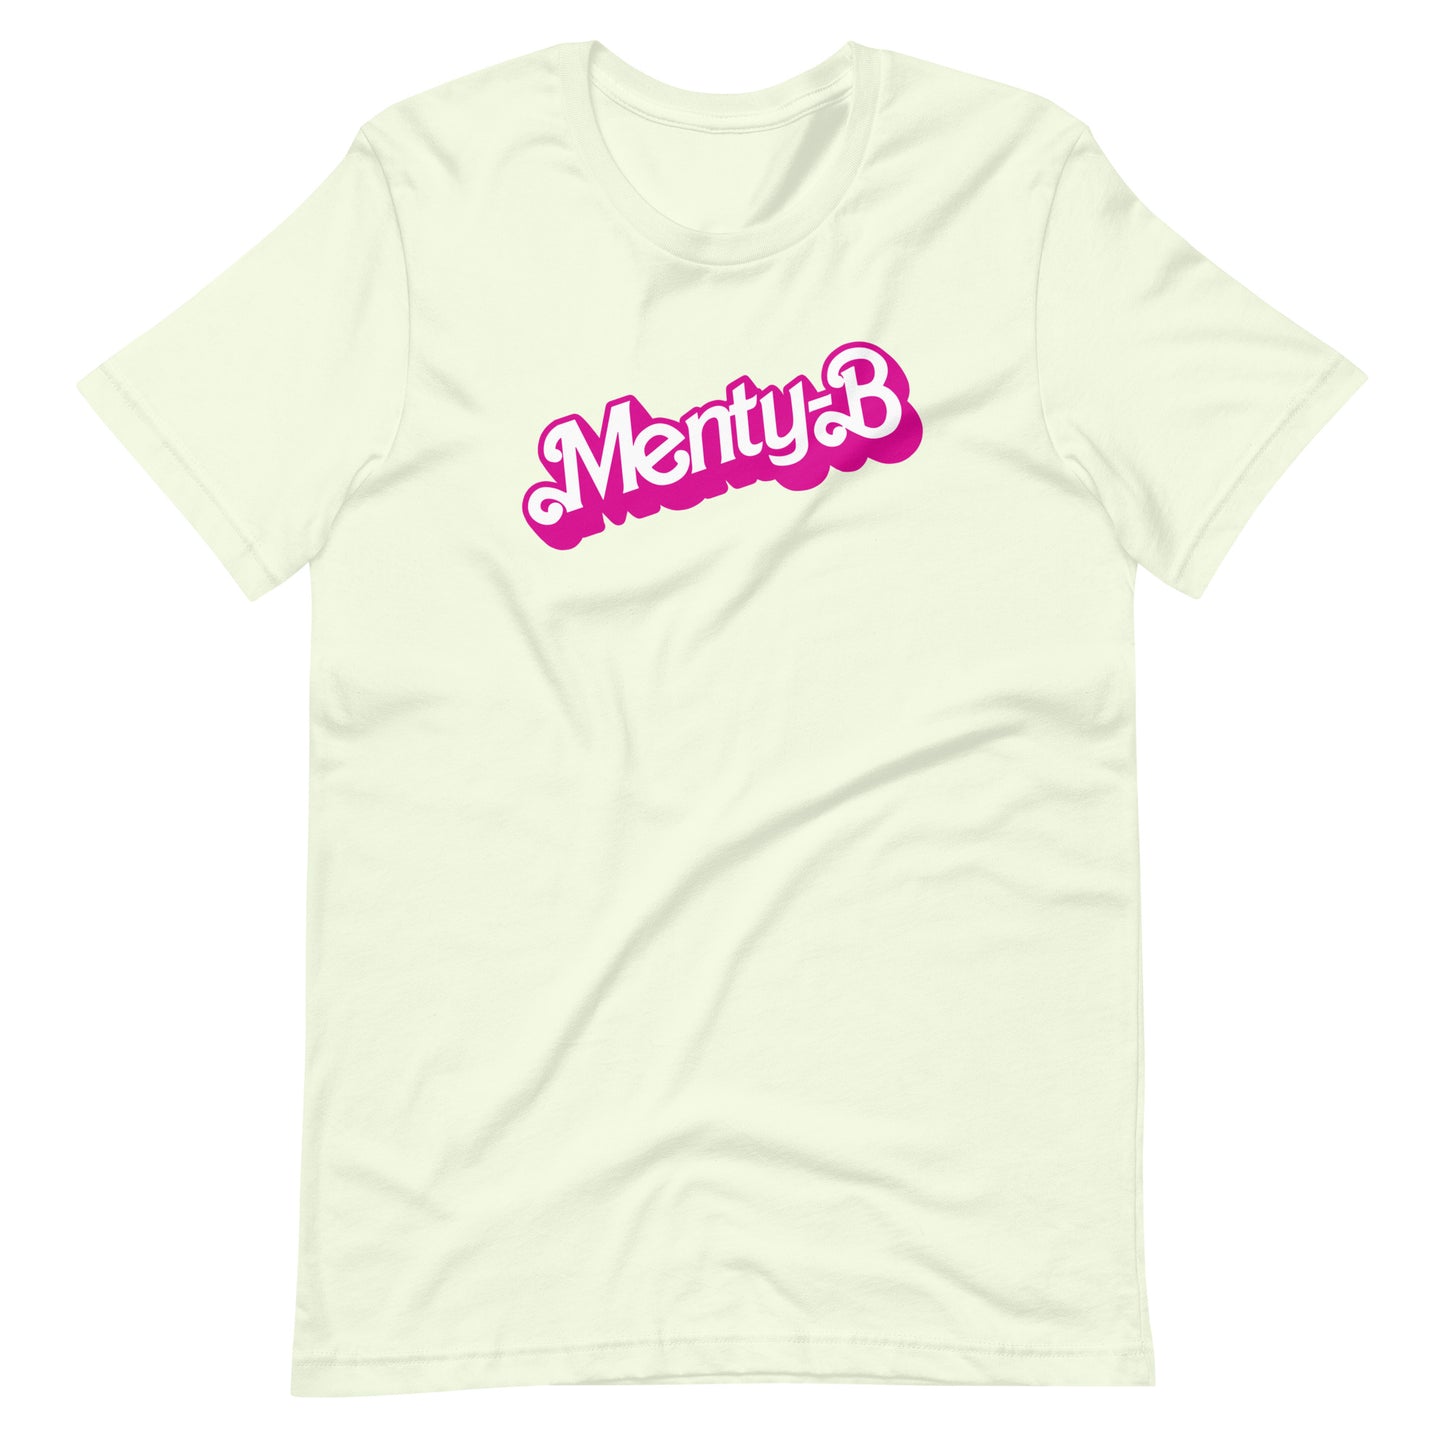 Menty-B Doll t-shirt